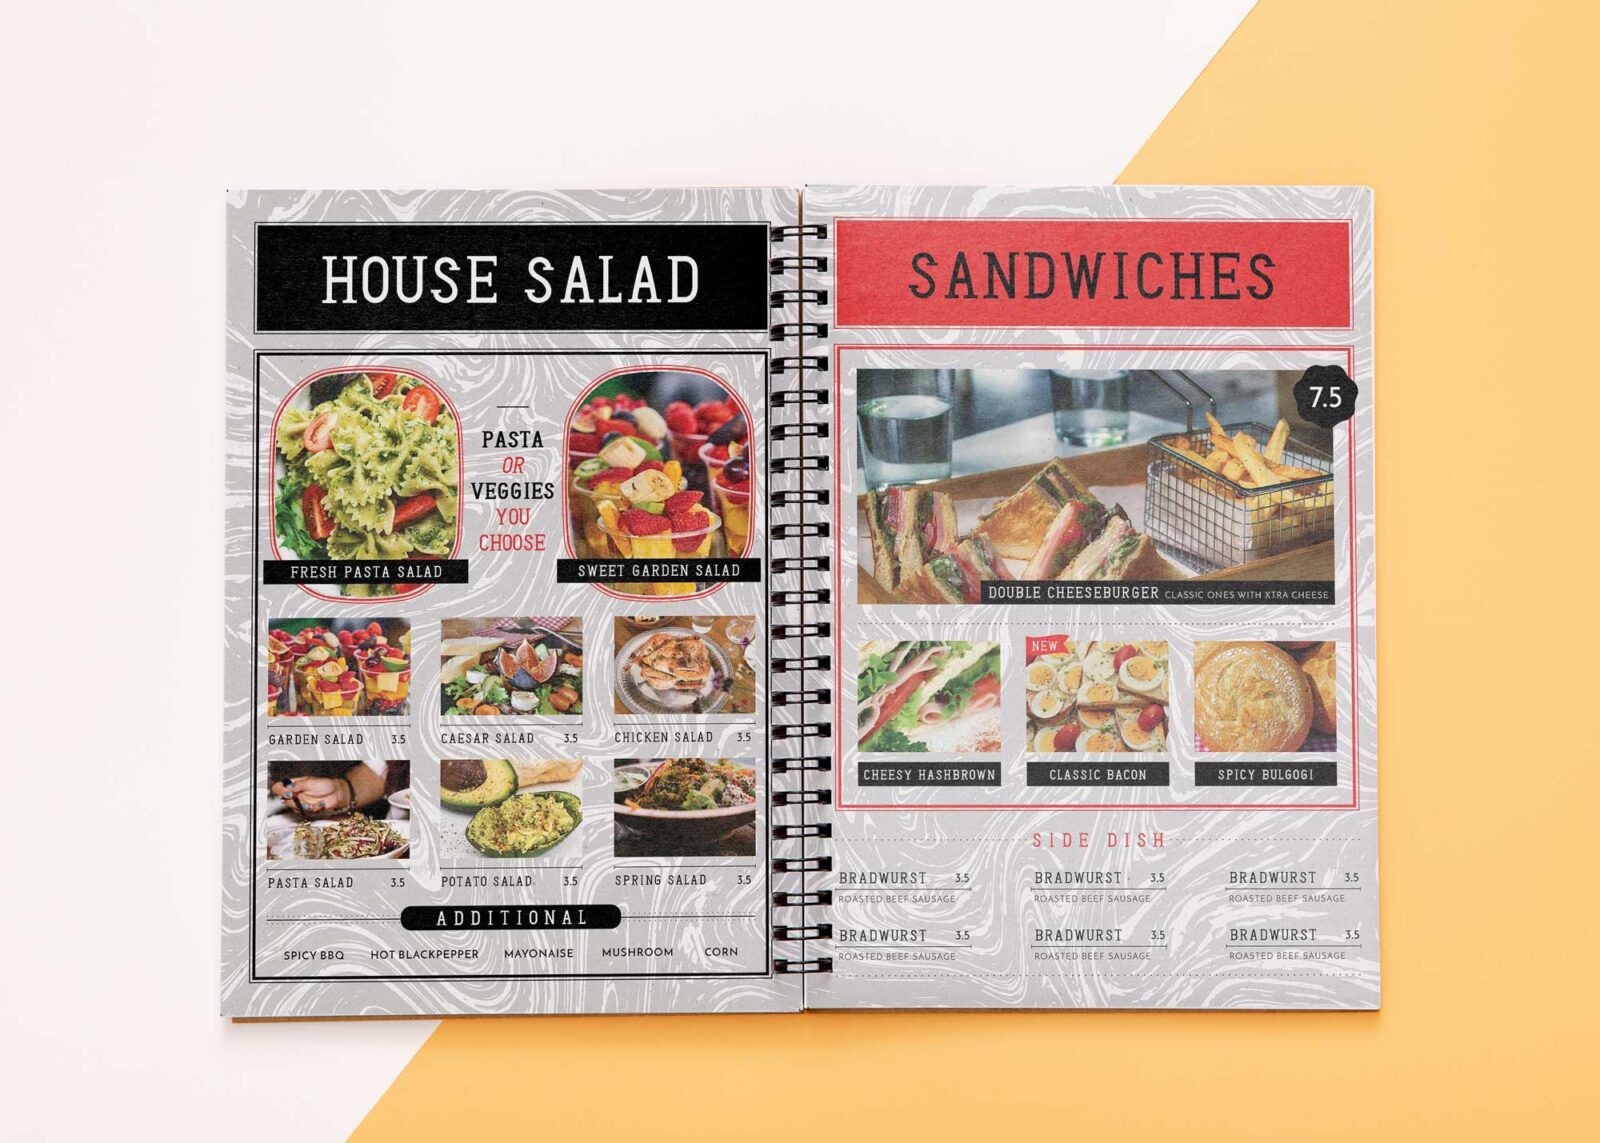 Modern Restaurant Book Menu Design Template